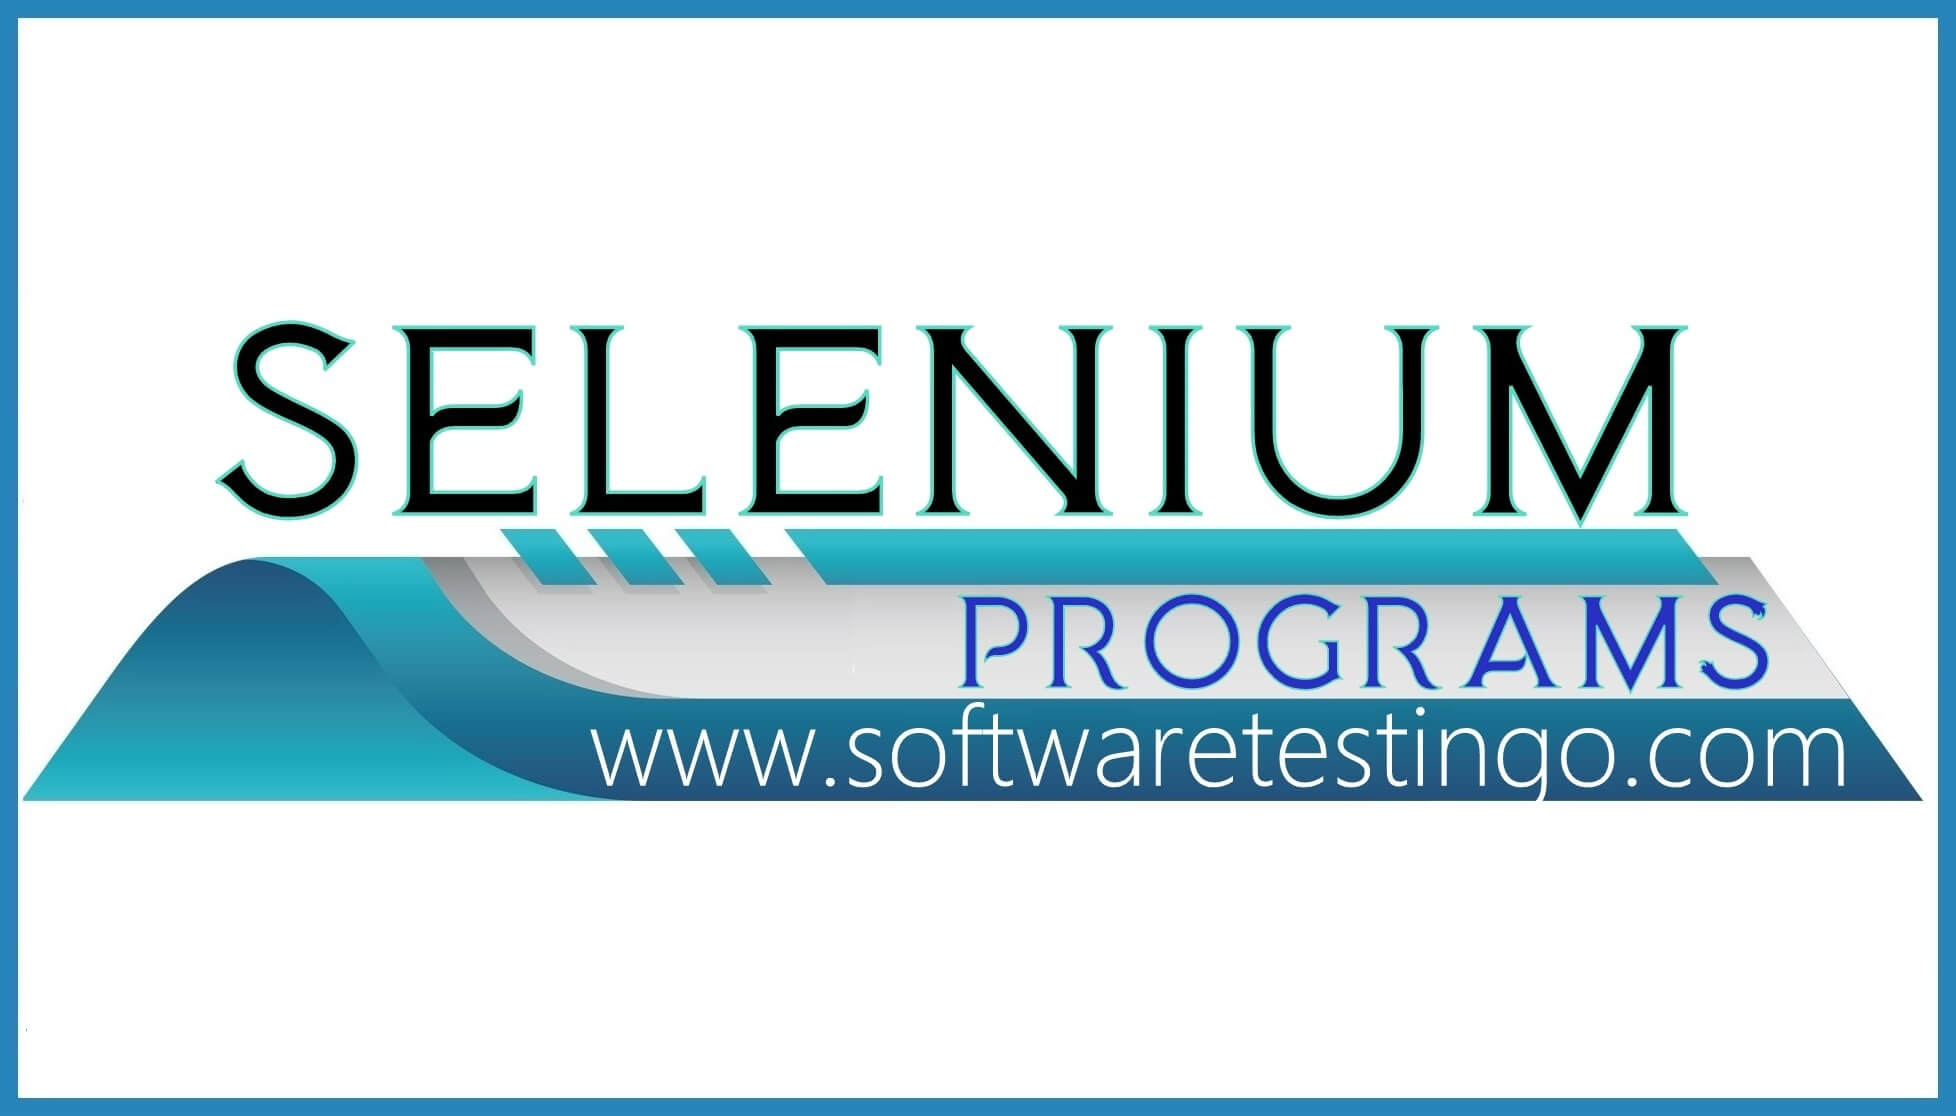 Automate Real Time Scenario Selenium Programs